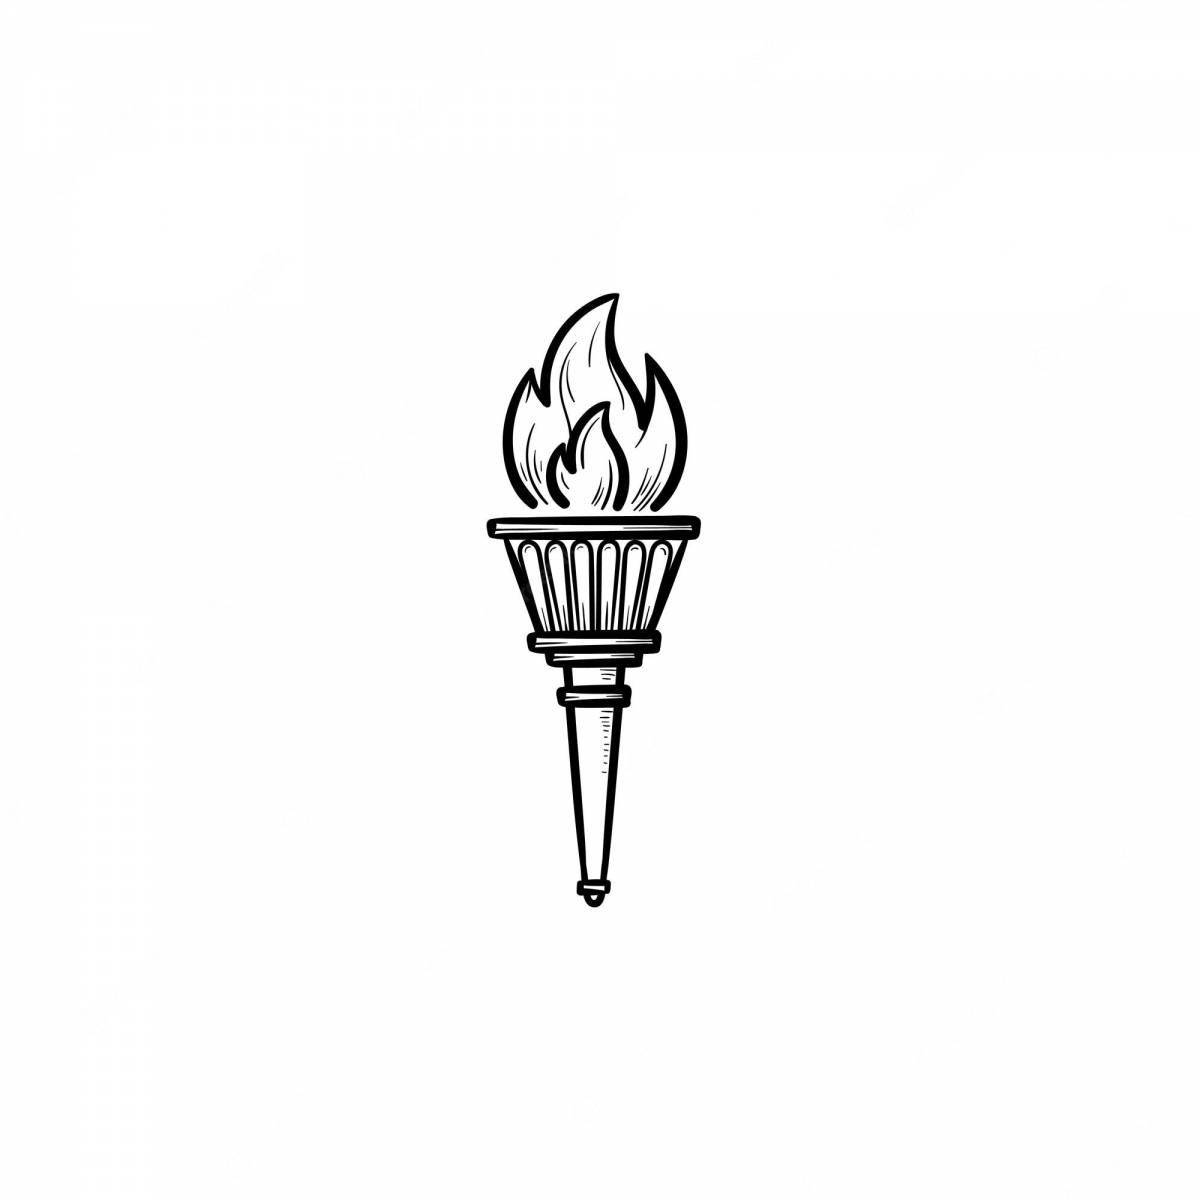 Раскраска олимпийский факел яркого оттенка